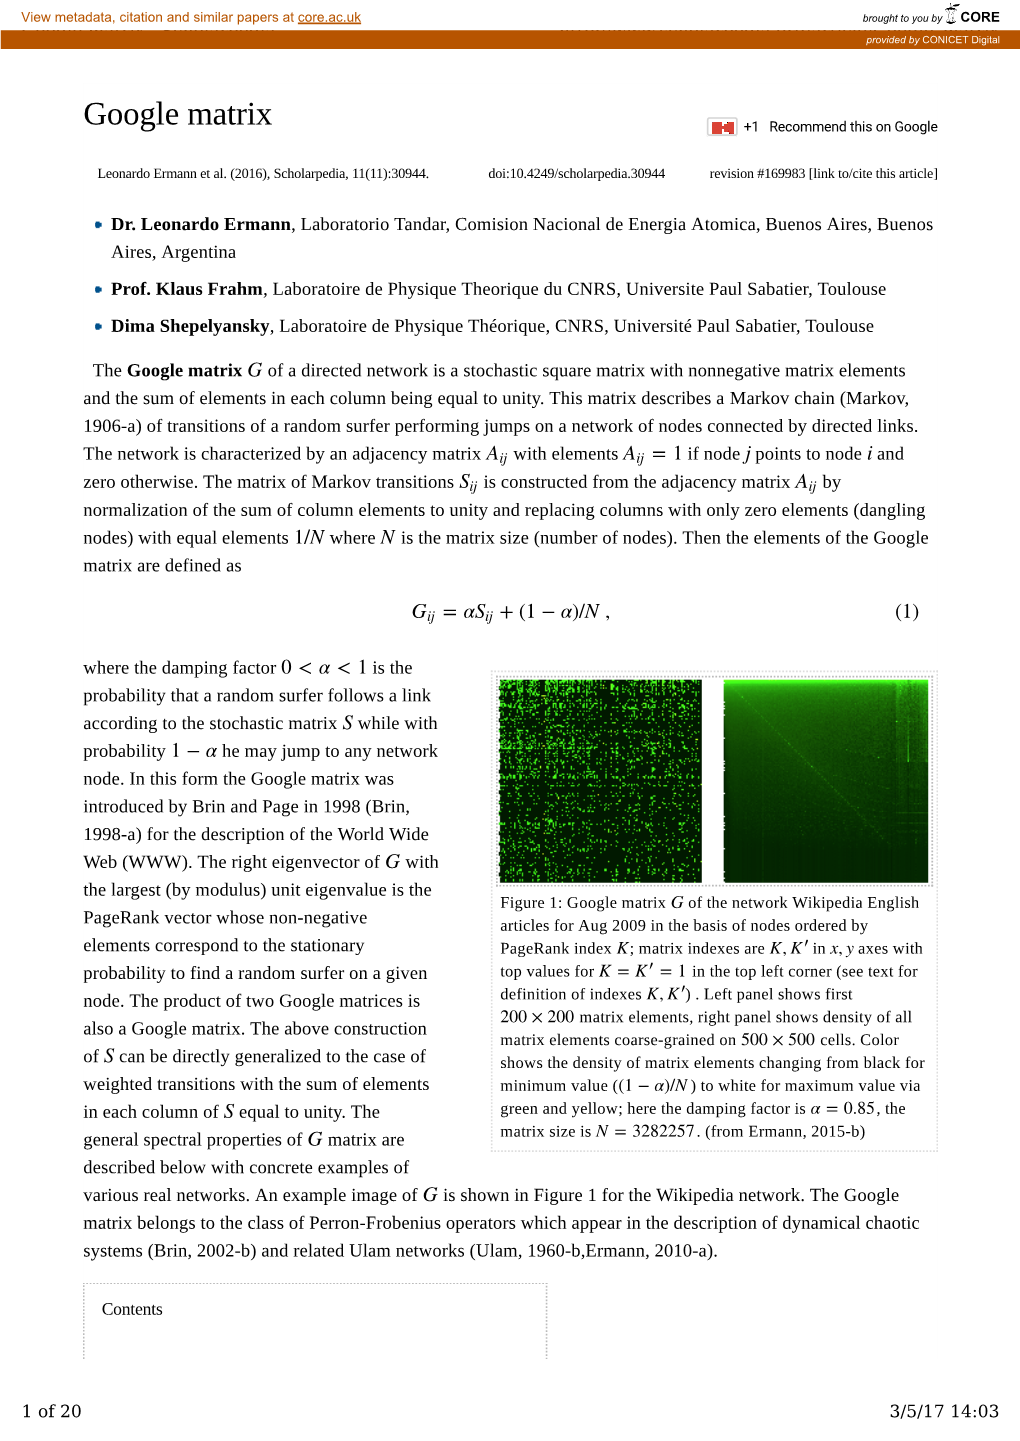 Google Matrix - Scholarpedia by CONICET Digital